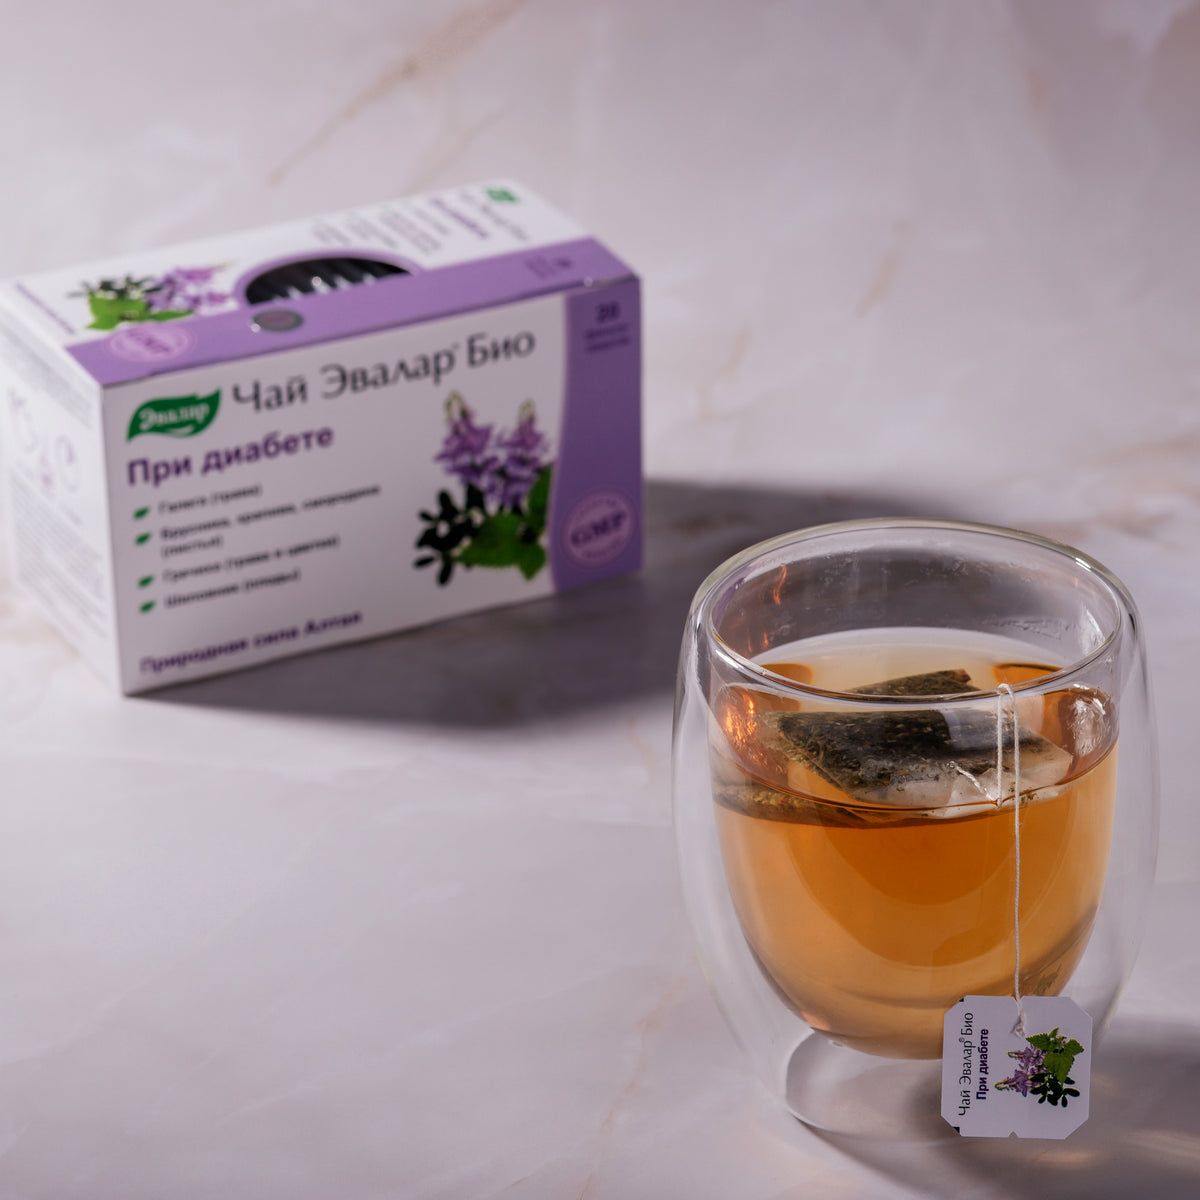 Buckwheat Nettles Galega Rosehip Lingonberry Evalar Tea Altai Siberia 20 Tea bags Herbal Mix